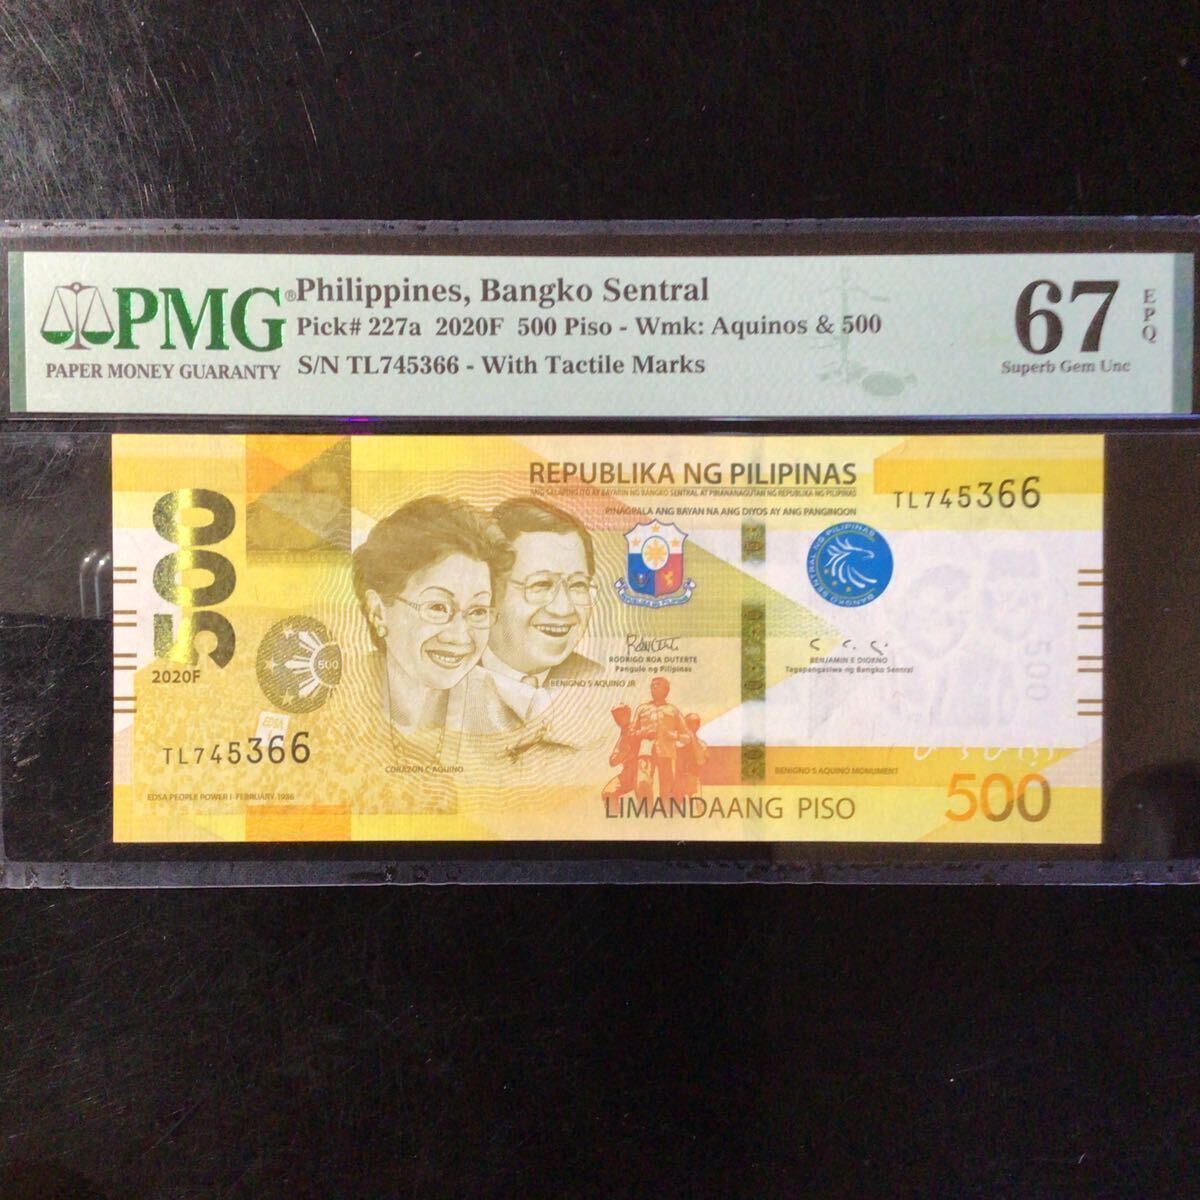 World Banknote Grading PHILIPPINES《Bangko Sentral》500 Piso【2020】『PMG Grading Superb Gem Uncirculated 67 EPQ』_画像1